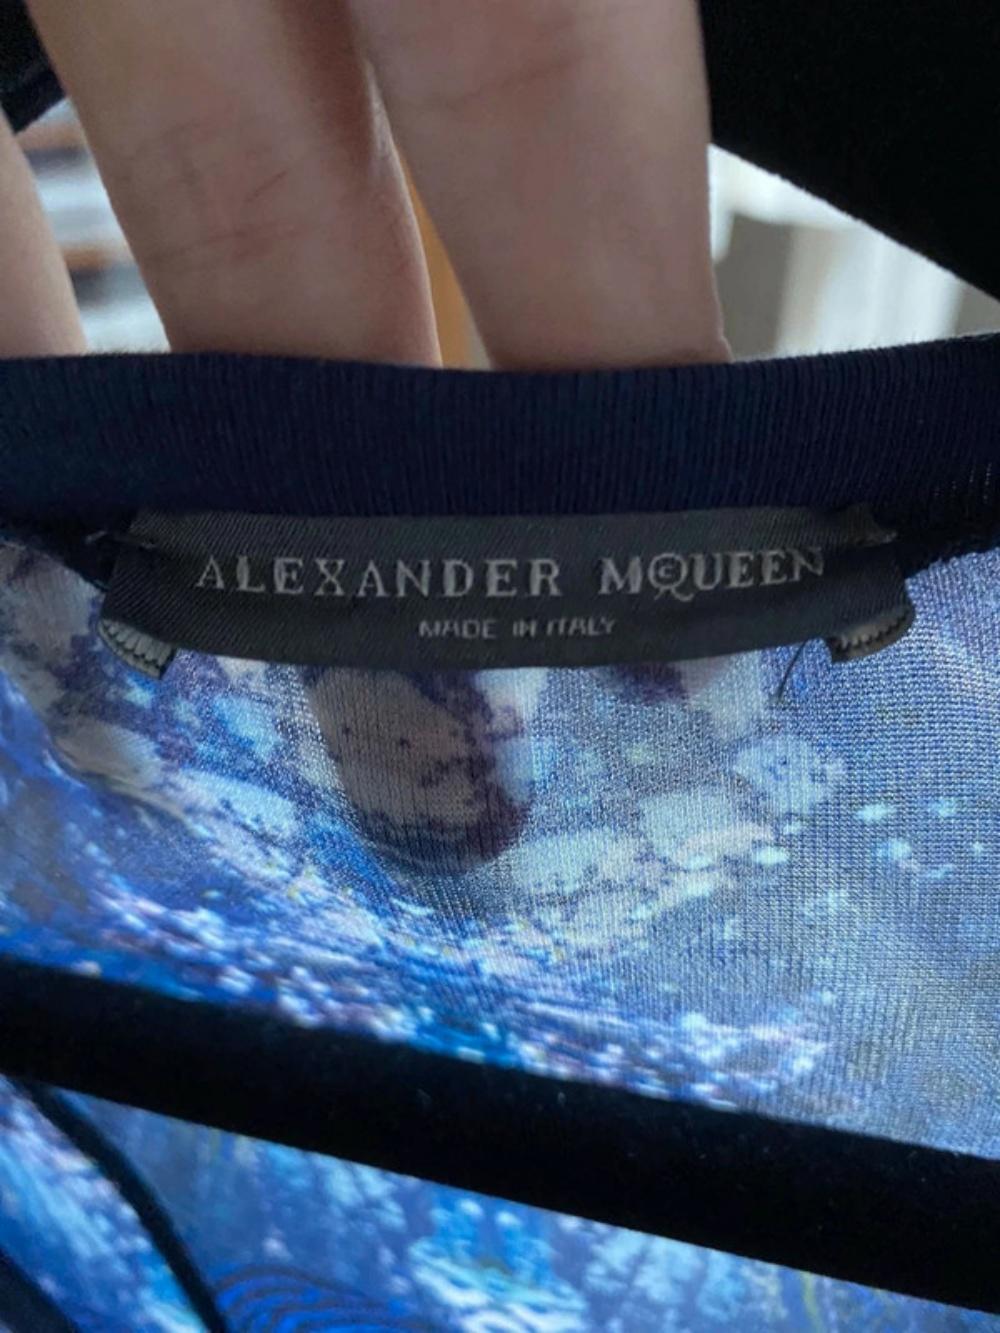 Alexander McQueen S/S 2010 Plato's Atlantis Kaleidoscope Dolman Sleeve Dress For Sale 6